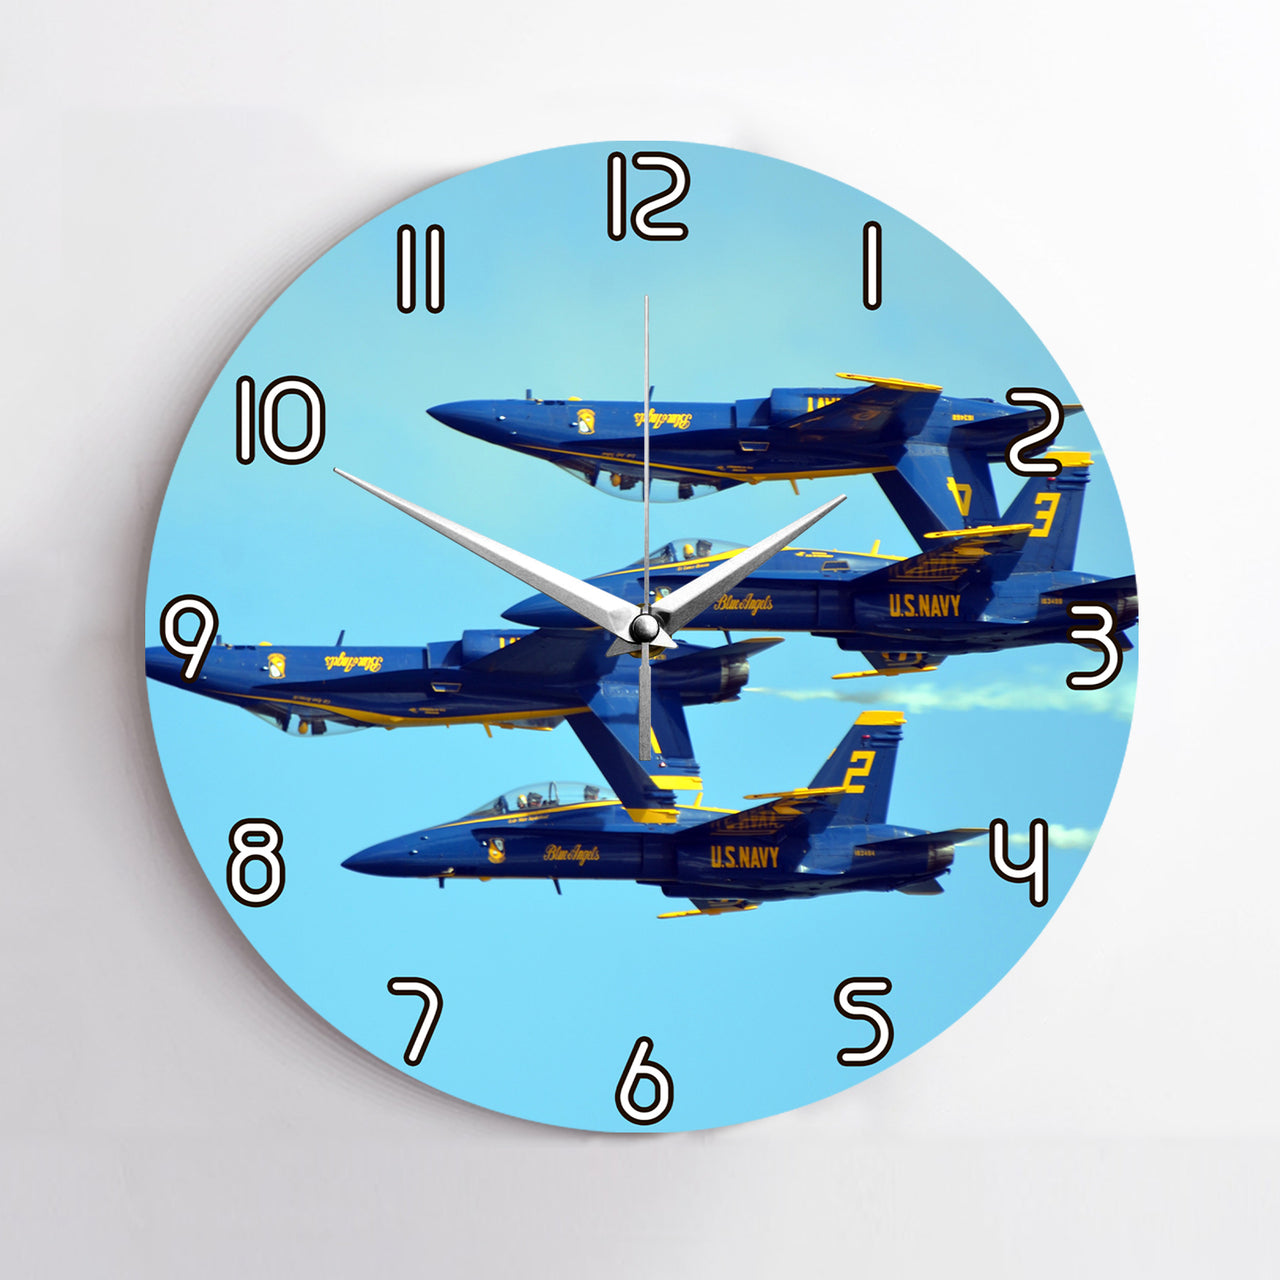 US Navy Blue Angels Printed Wall Clocks